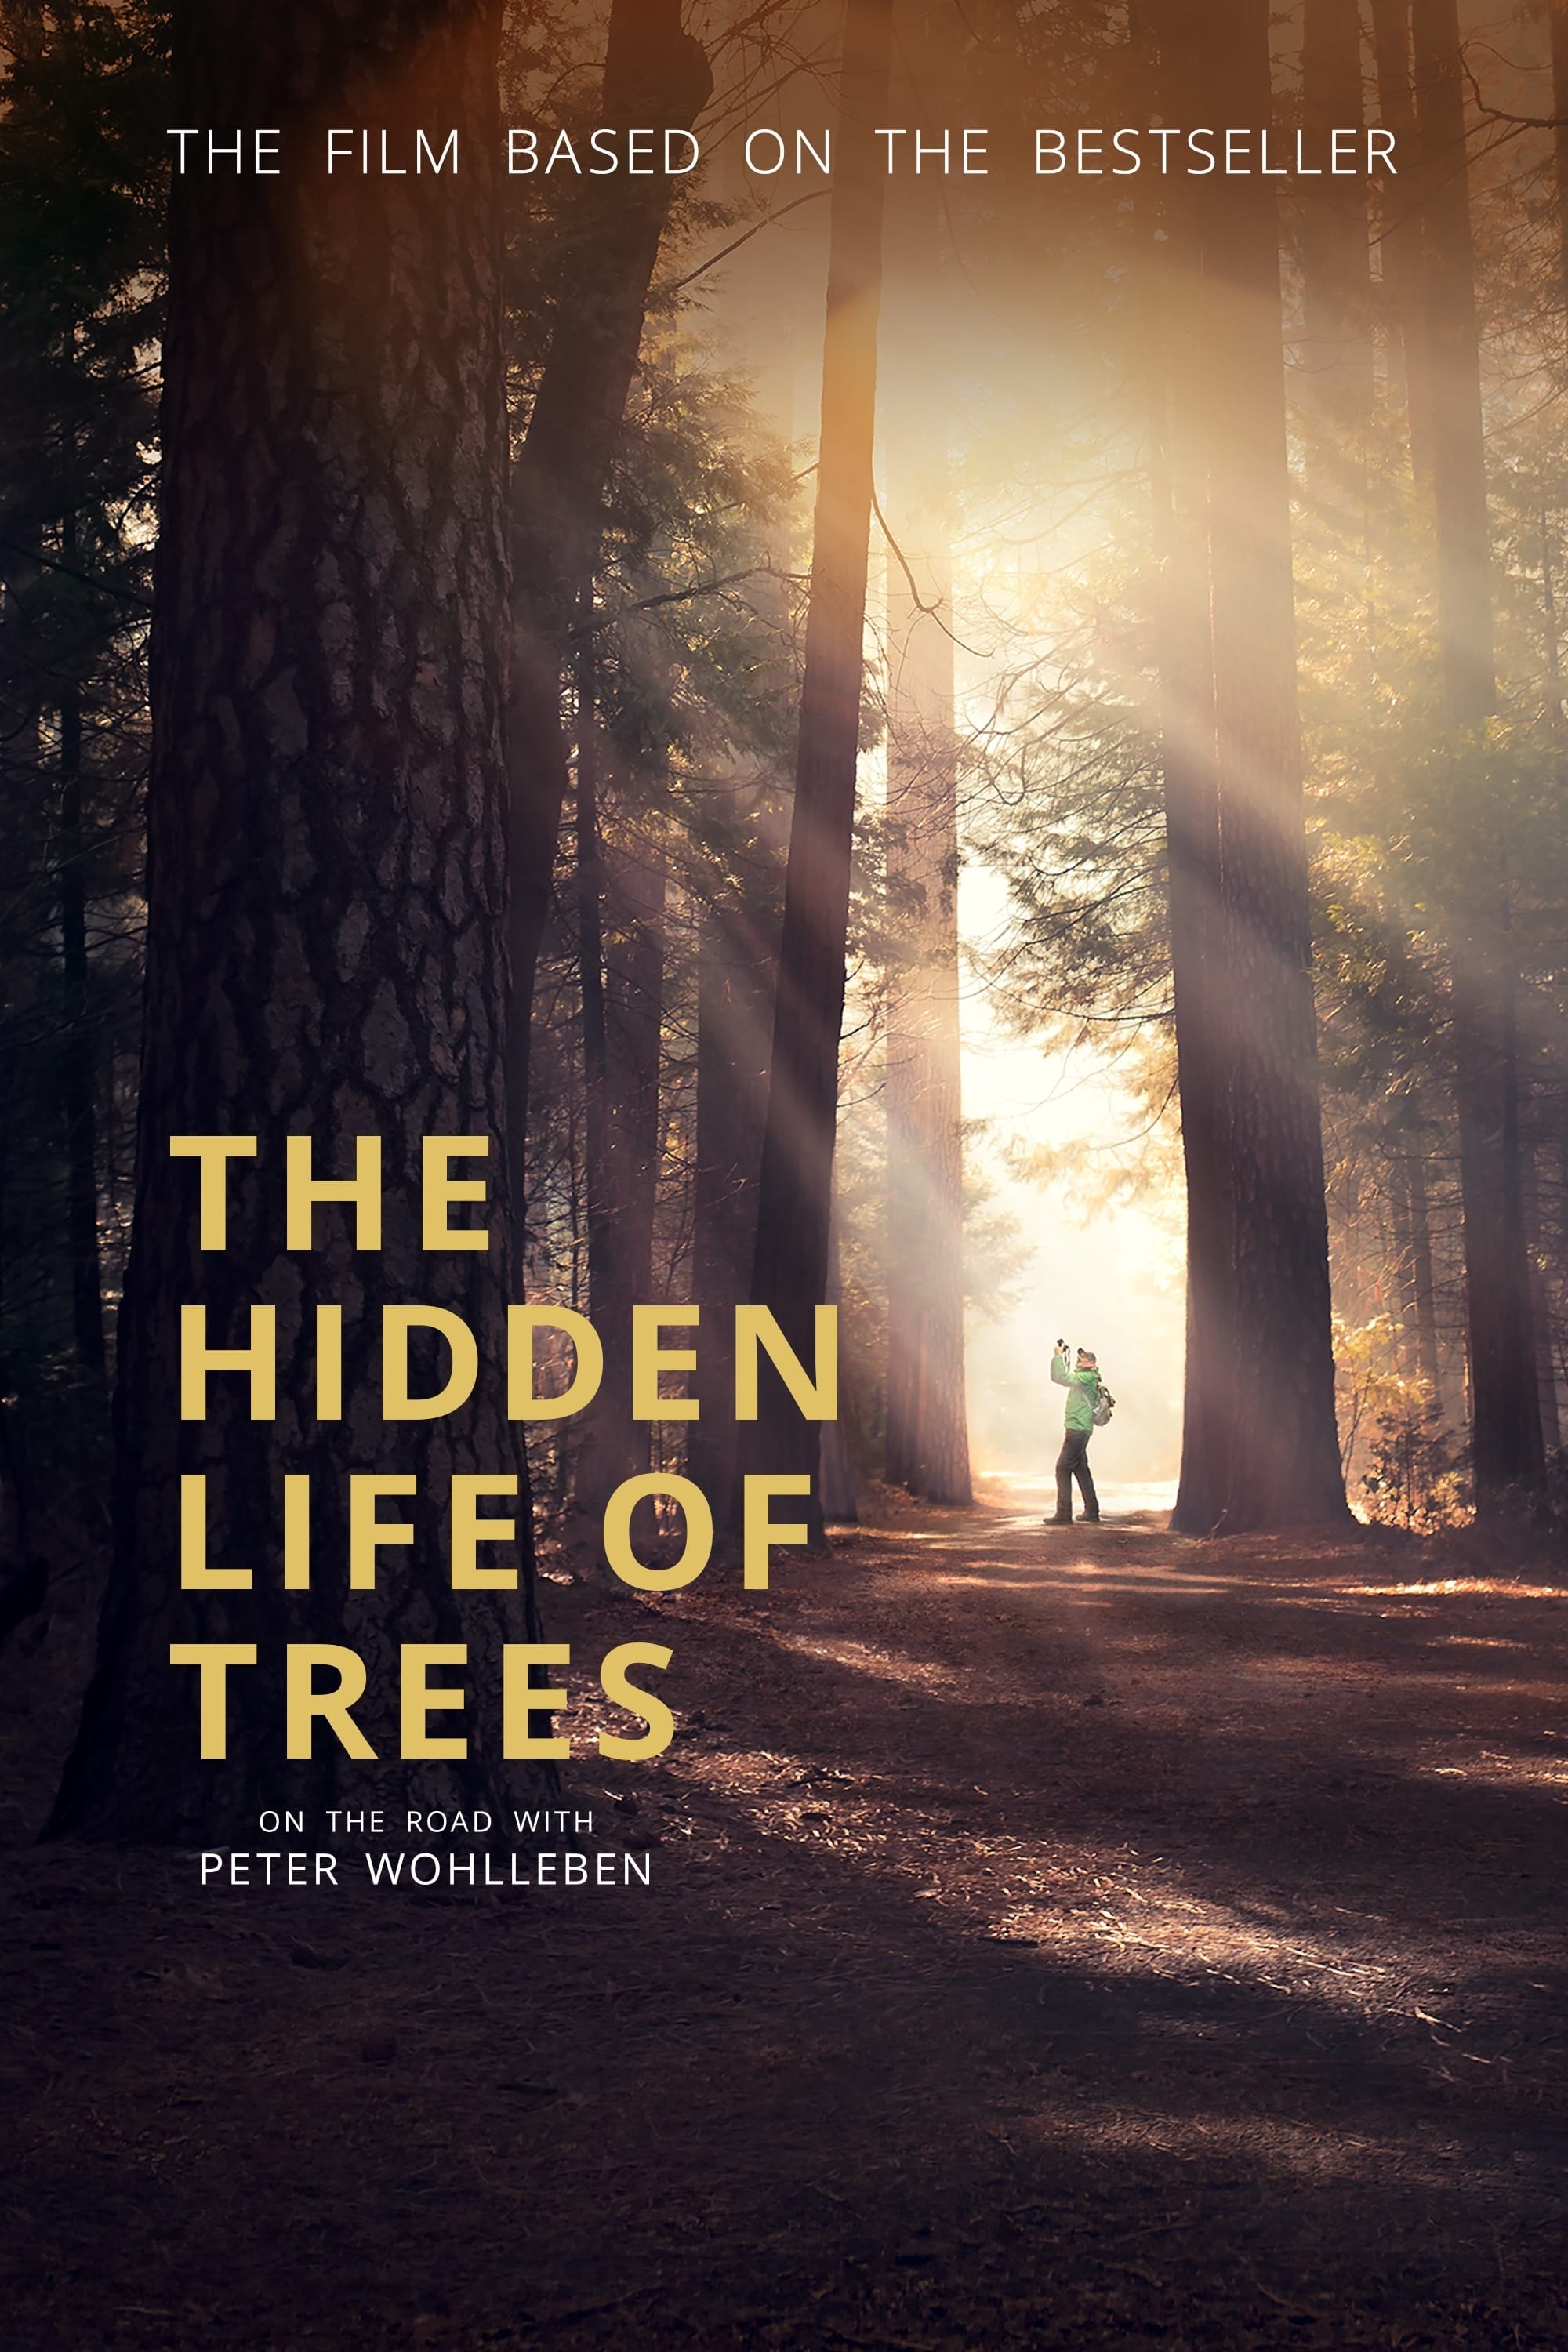 La vida secreta de los árboles